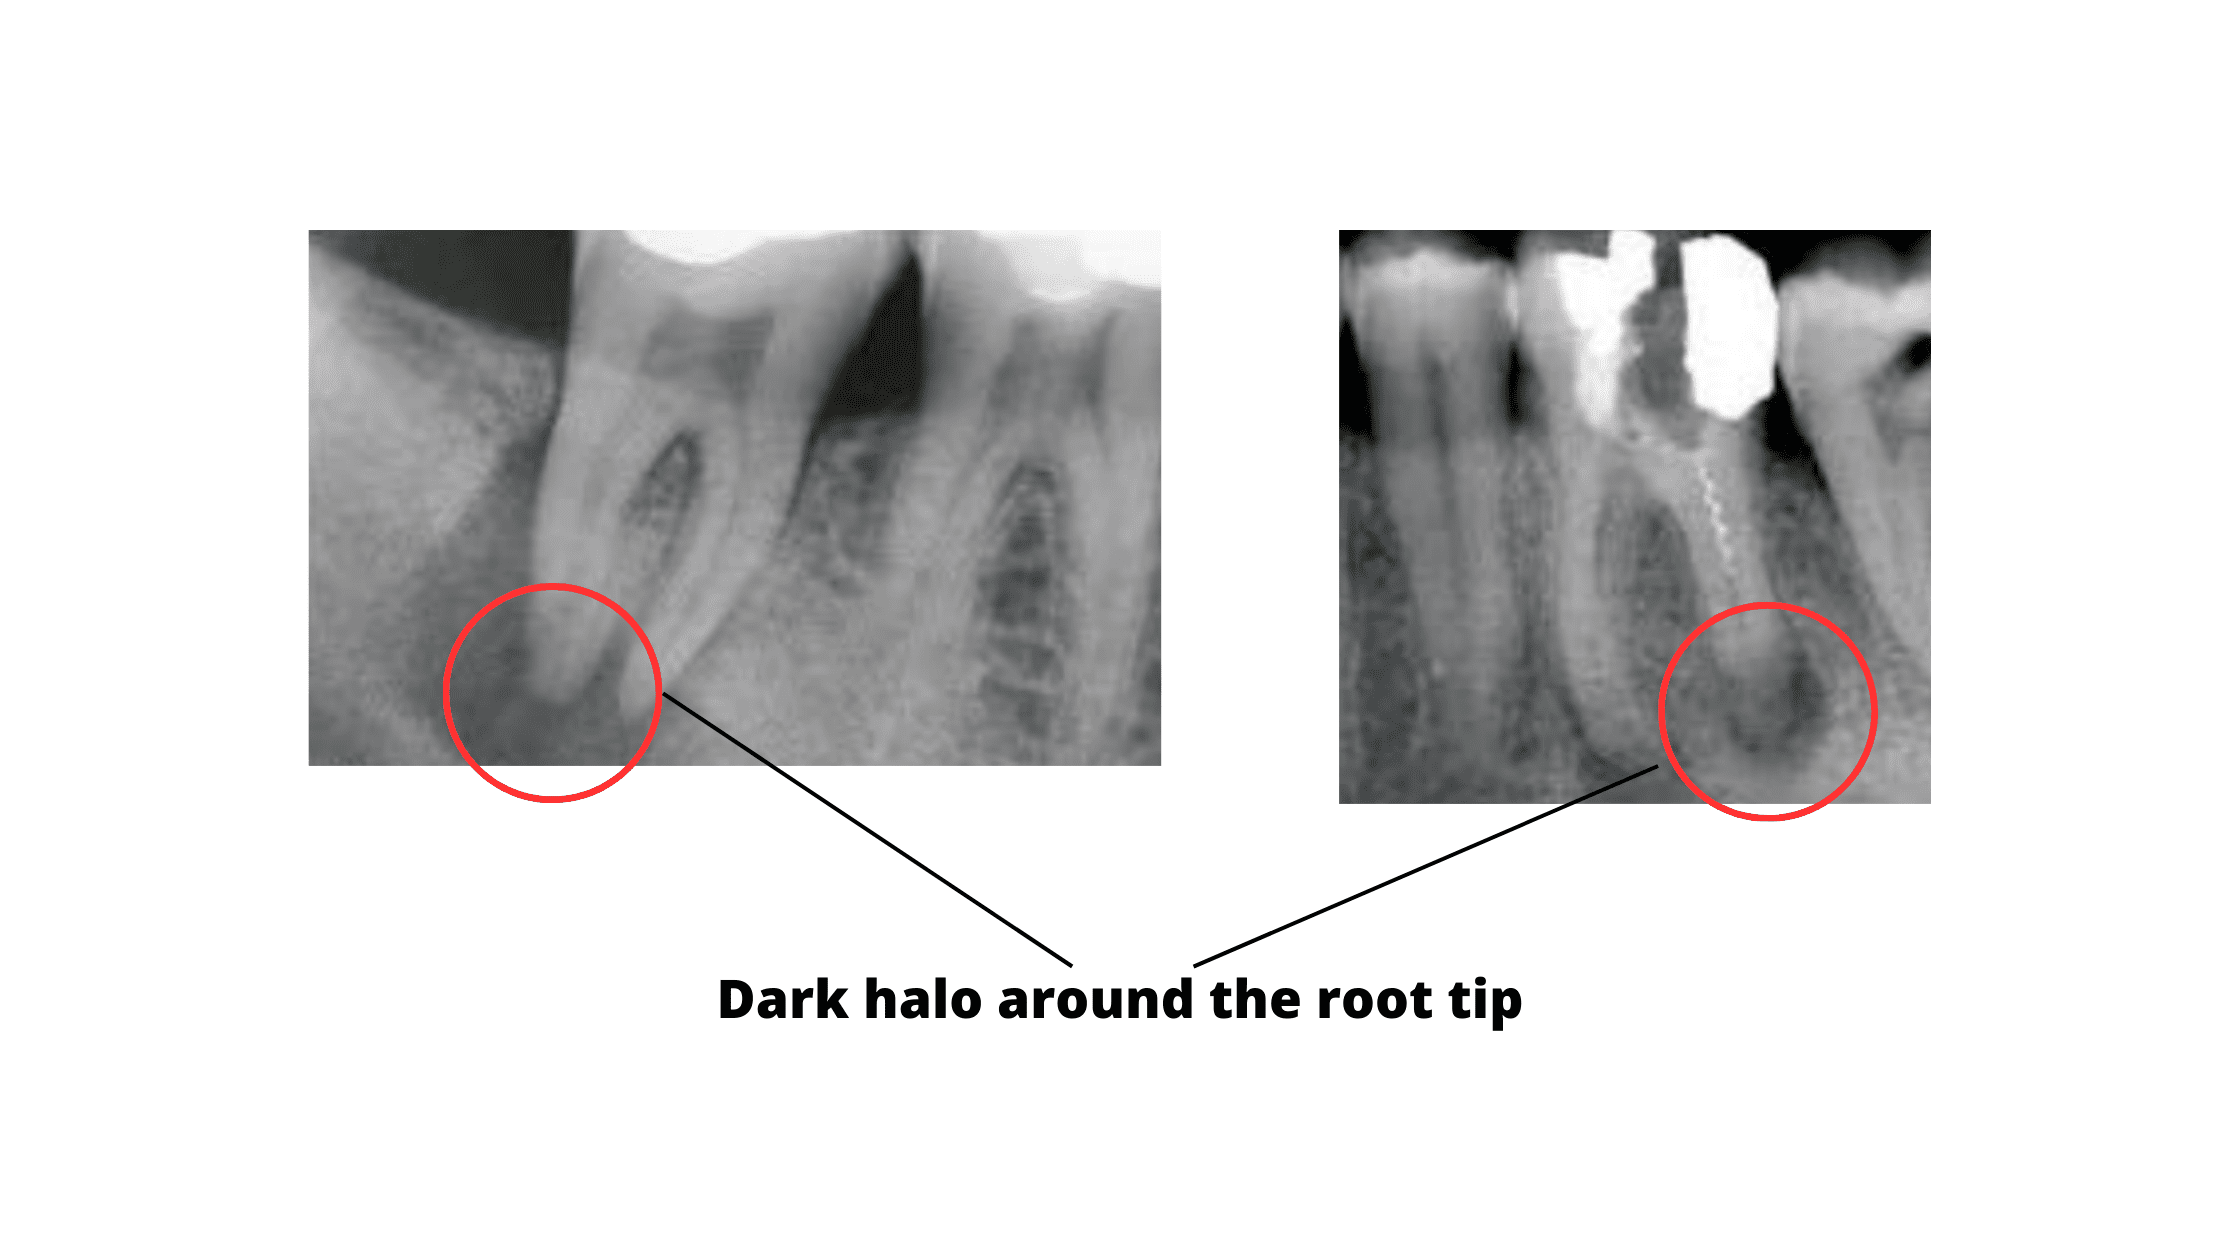 X-rays showing dark halo around the root tip